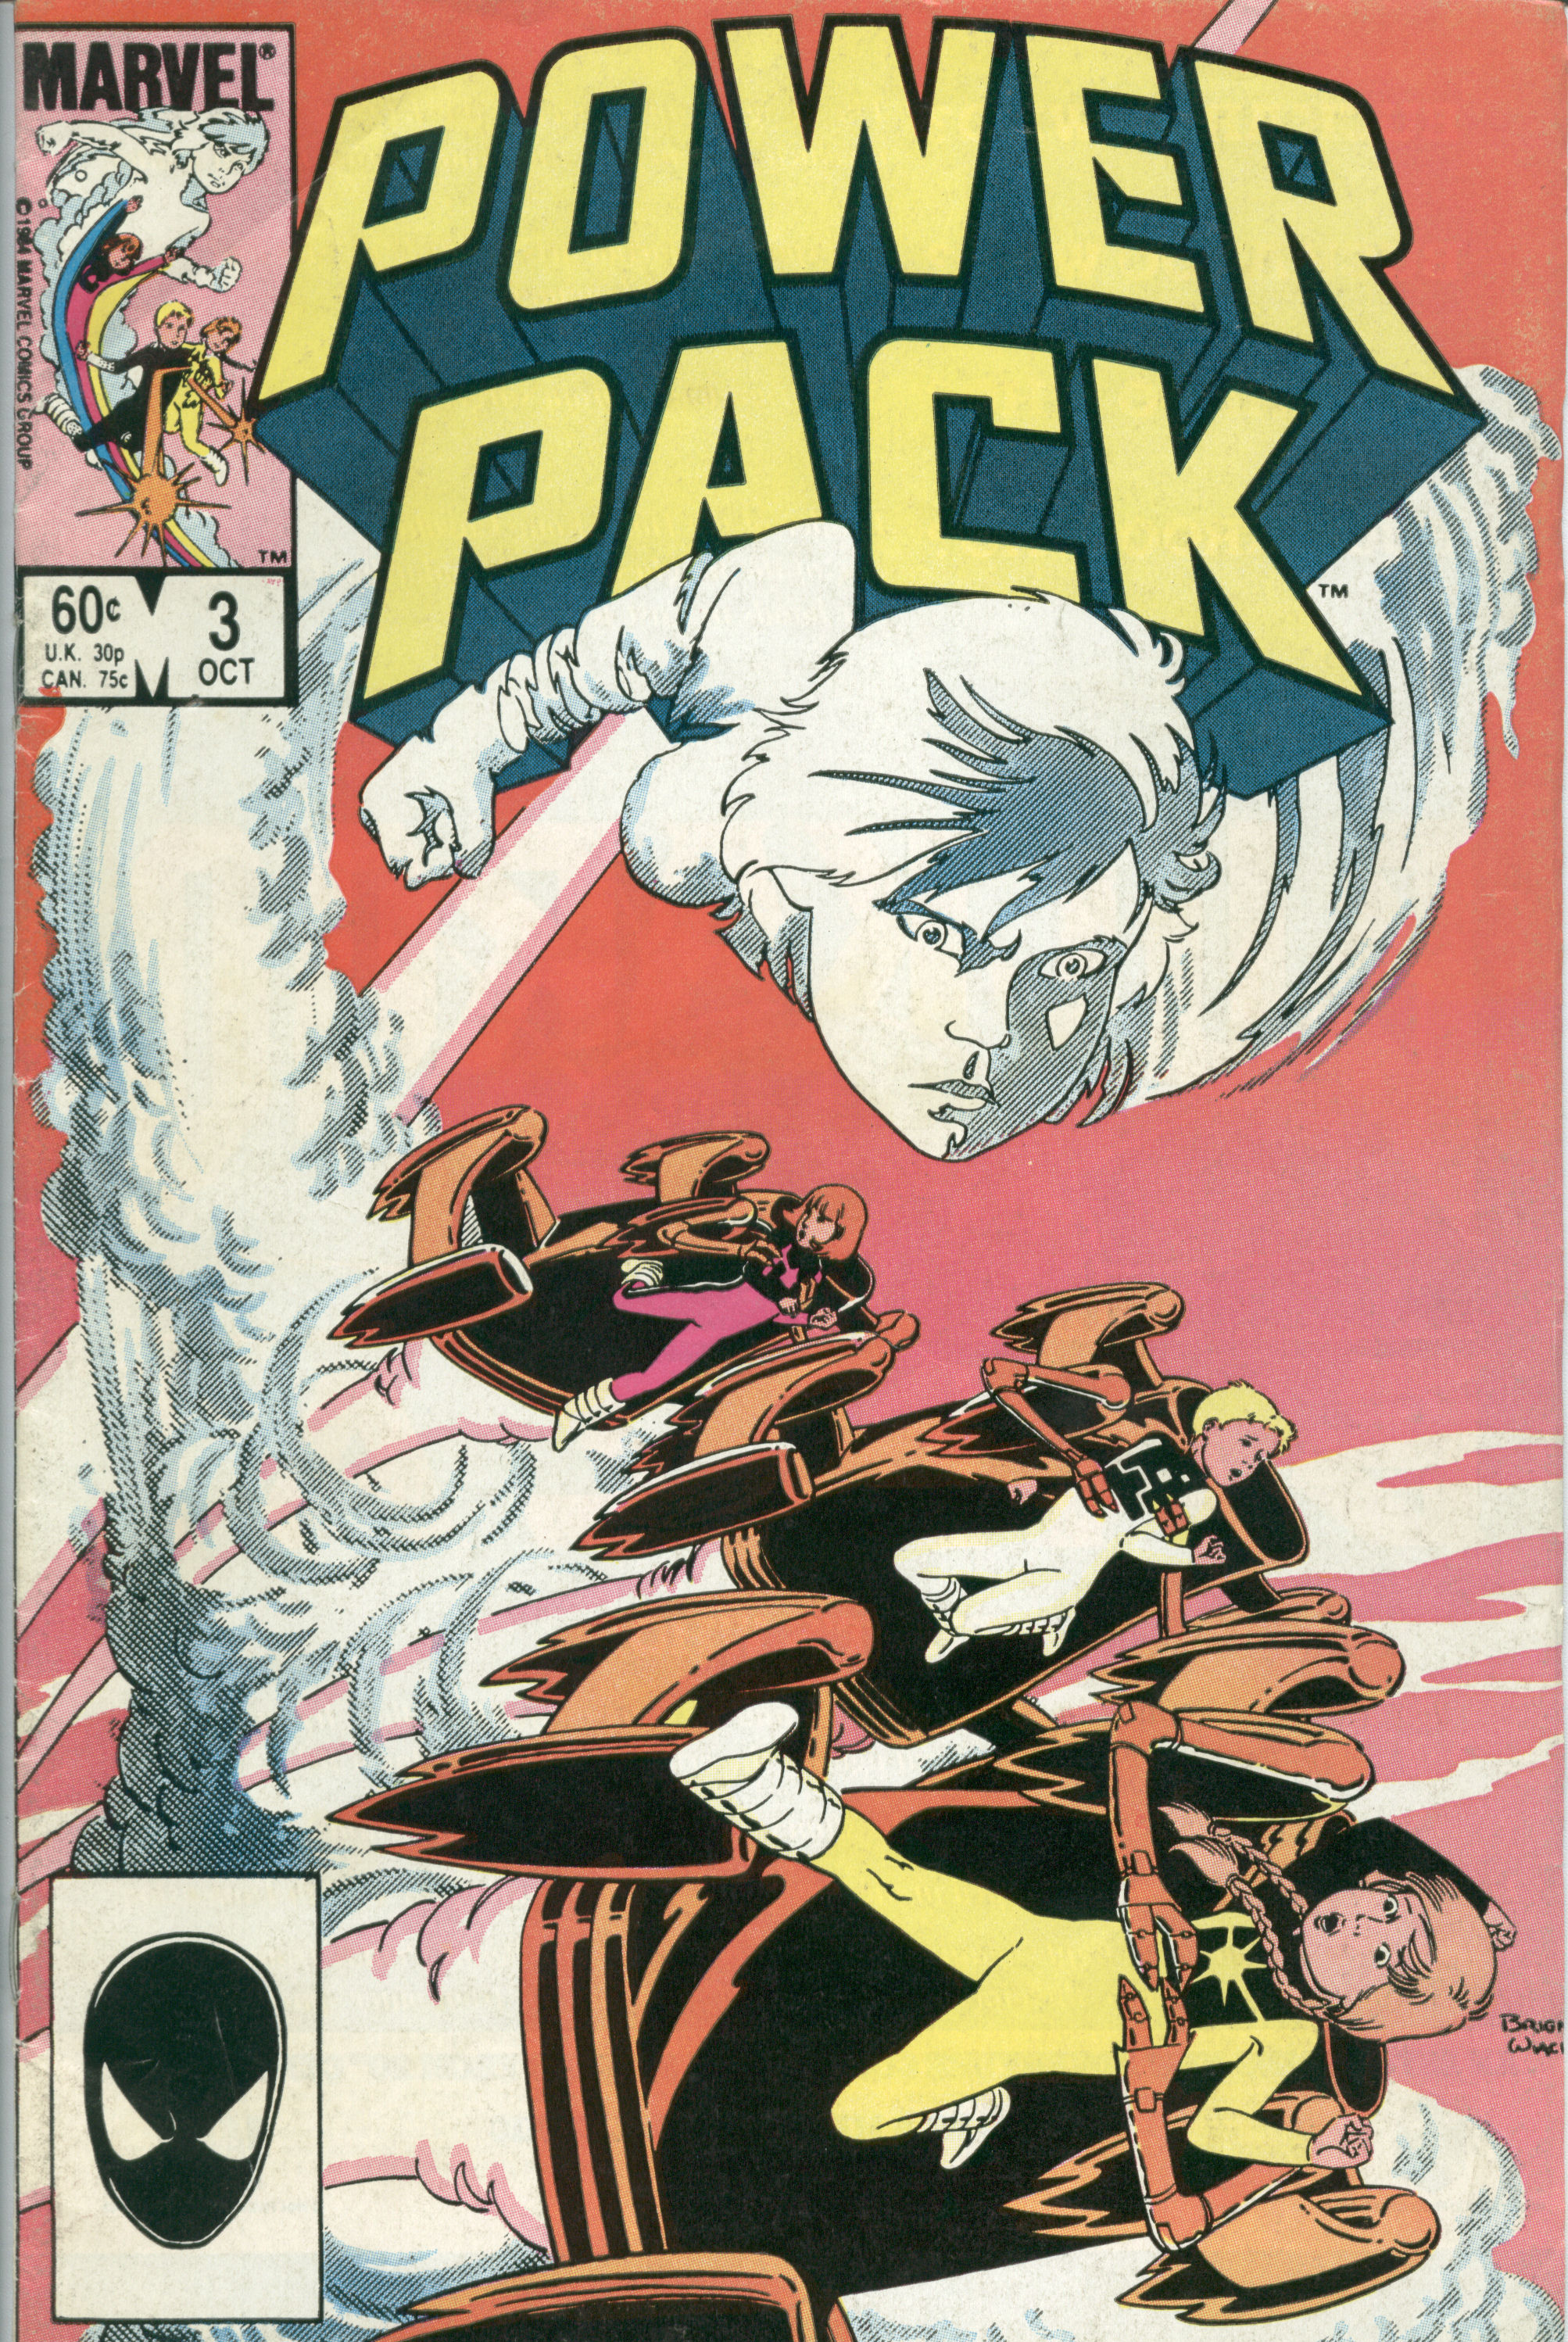 Power packing комиксы. POWERPACK комиксы. 1984 Книга комикс. Комикс оригинальный 12+. Powerhouse 1984.